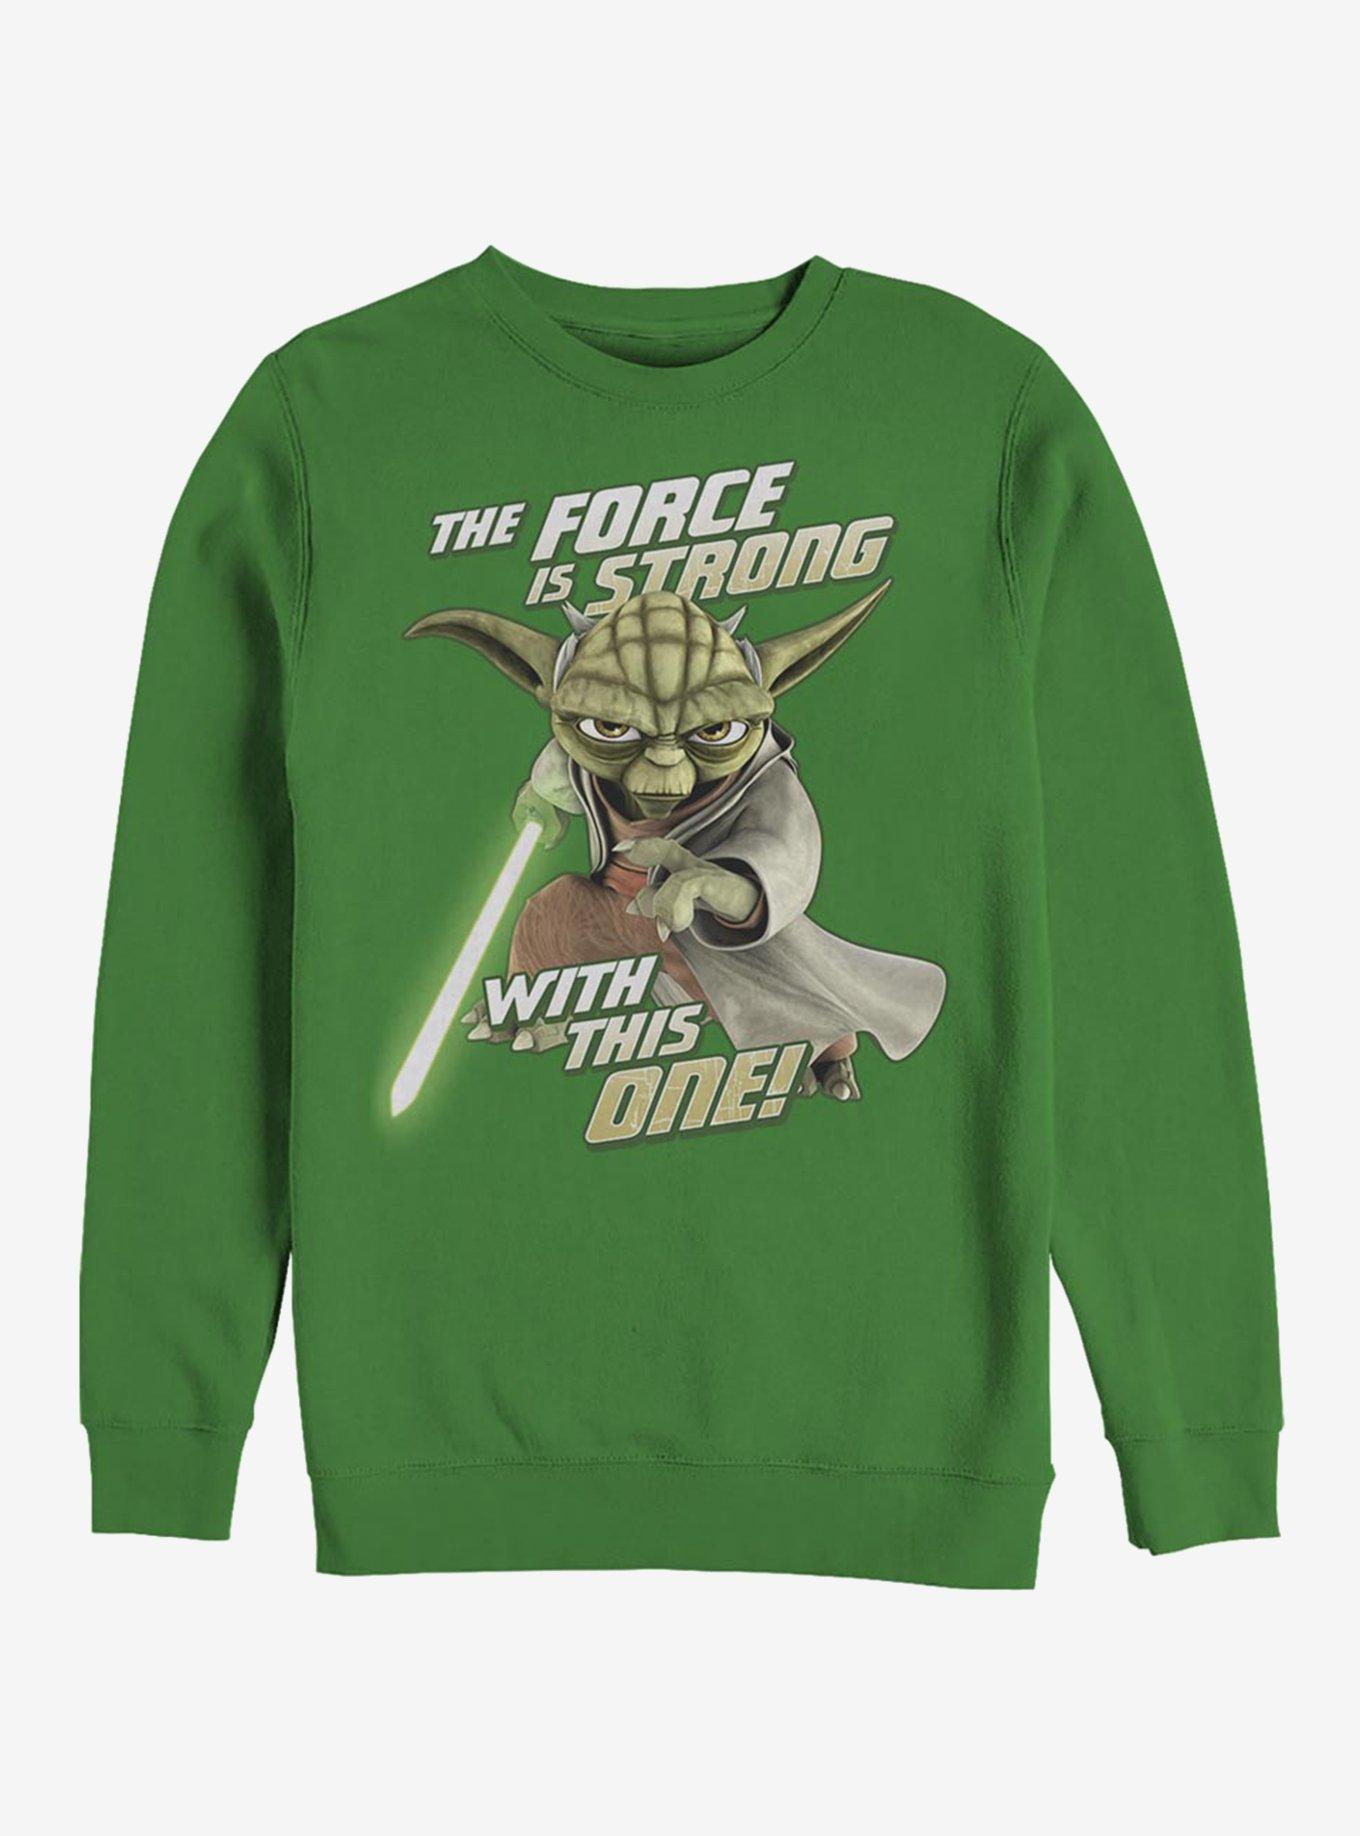 Star Wars The Clone Wars Jedi Strong Crew Sweatshirt, , hi-res